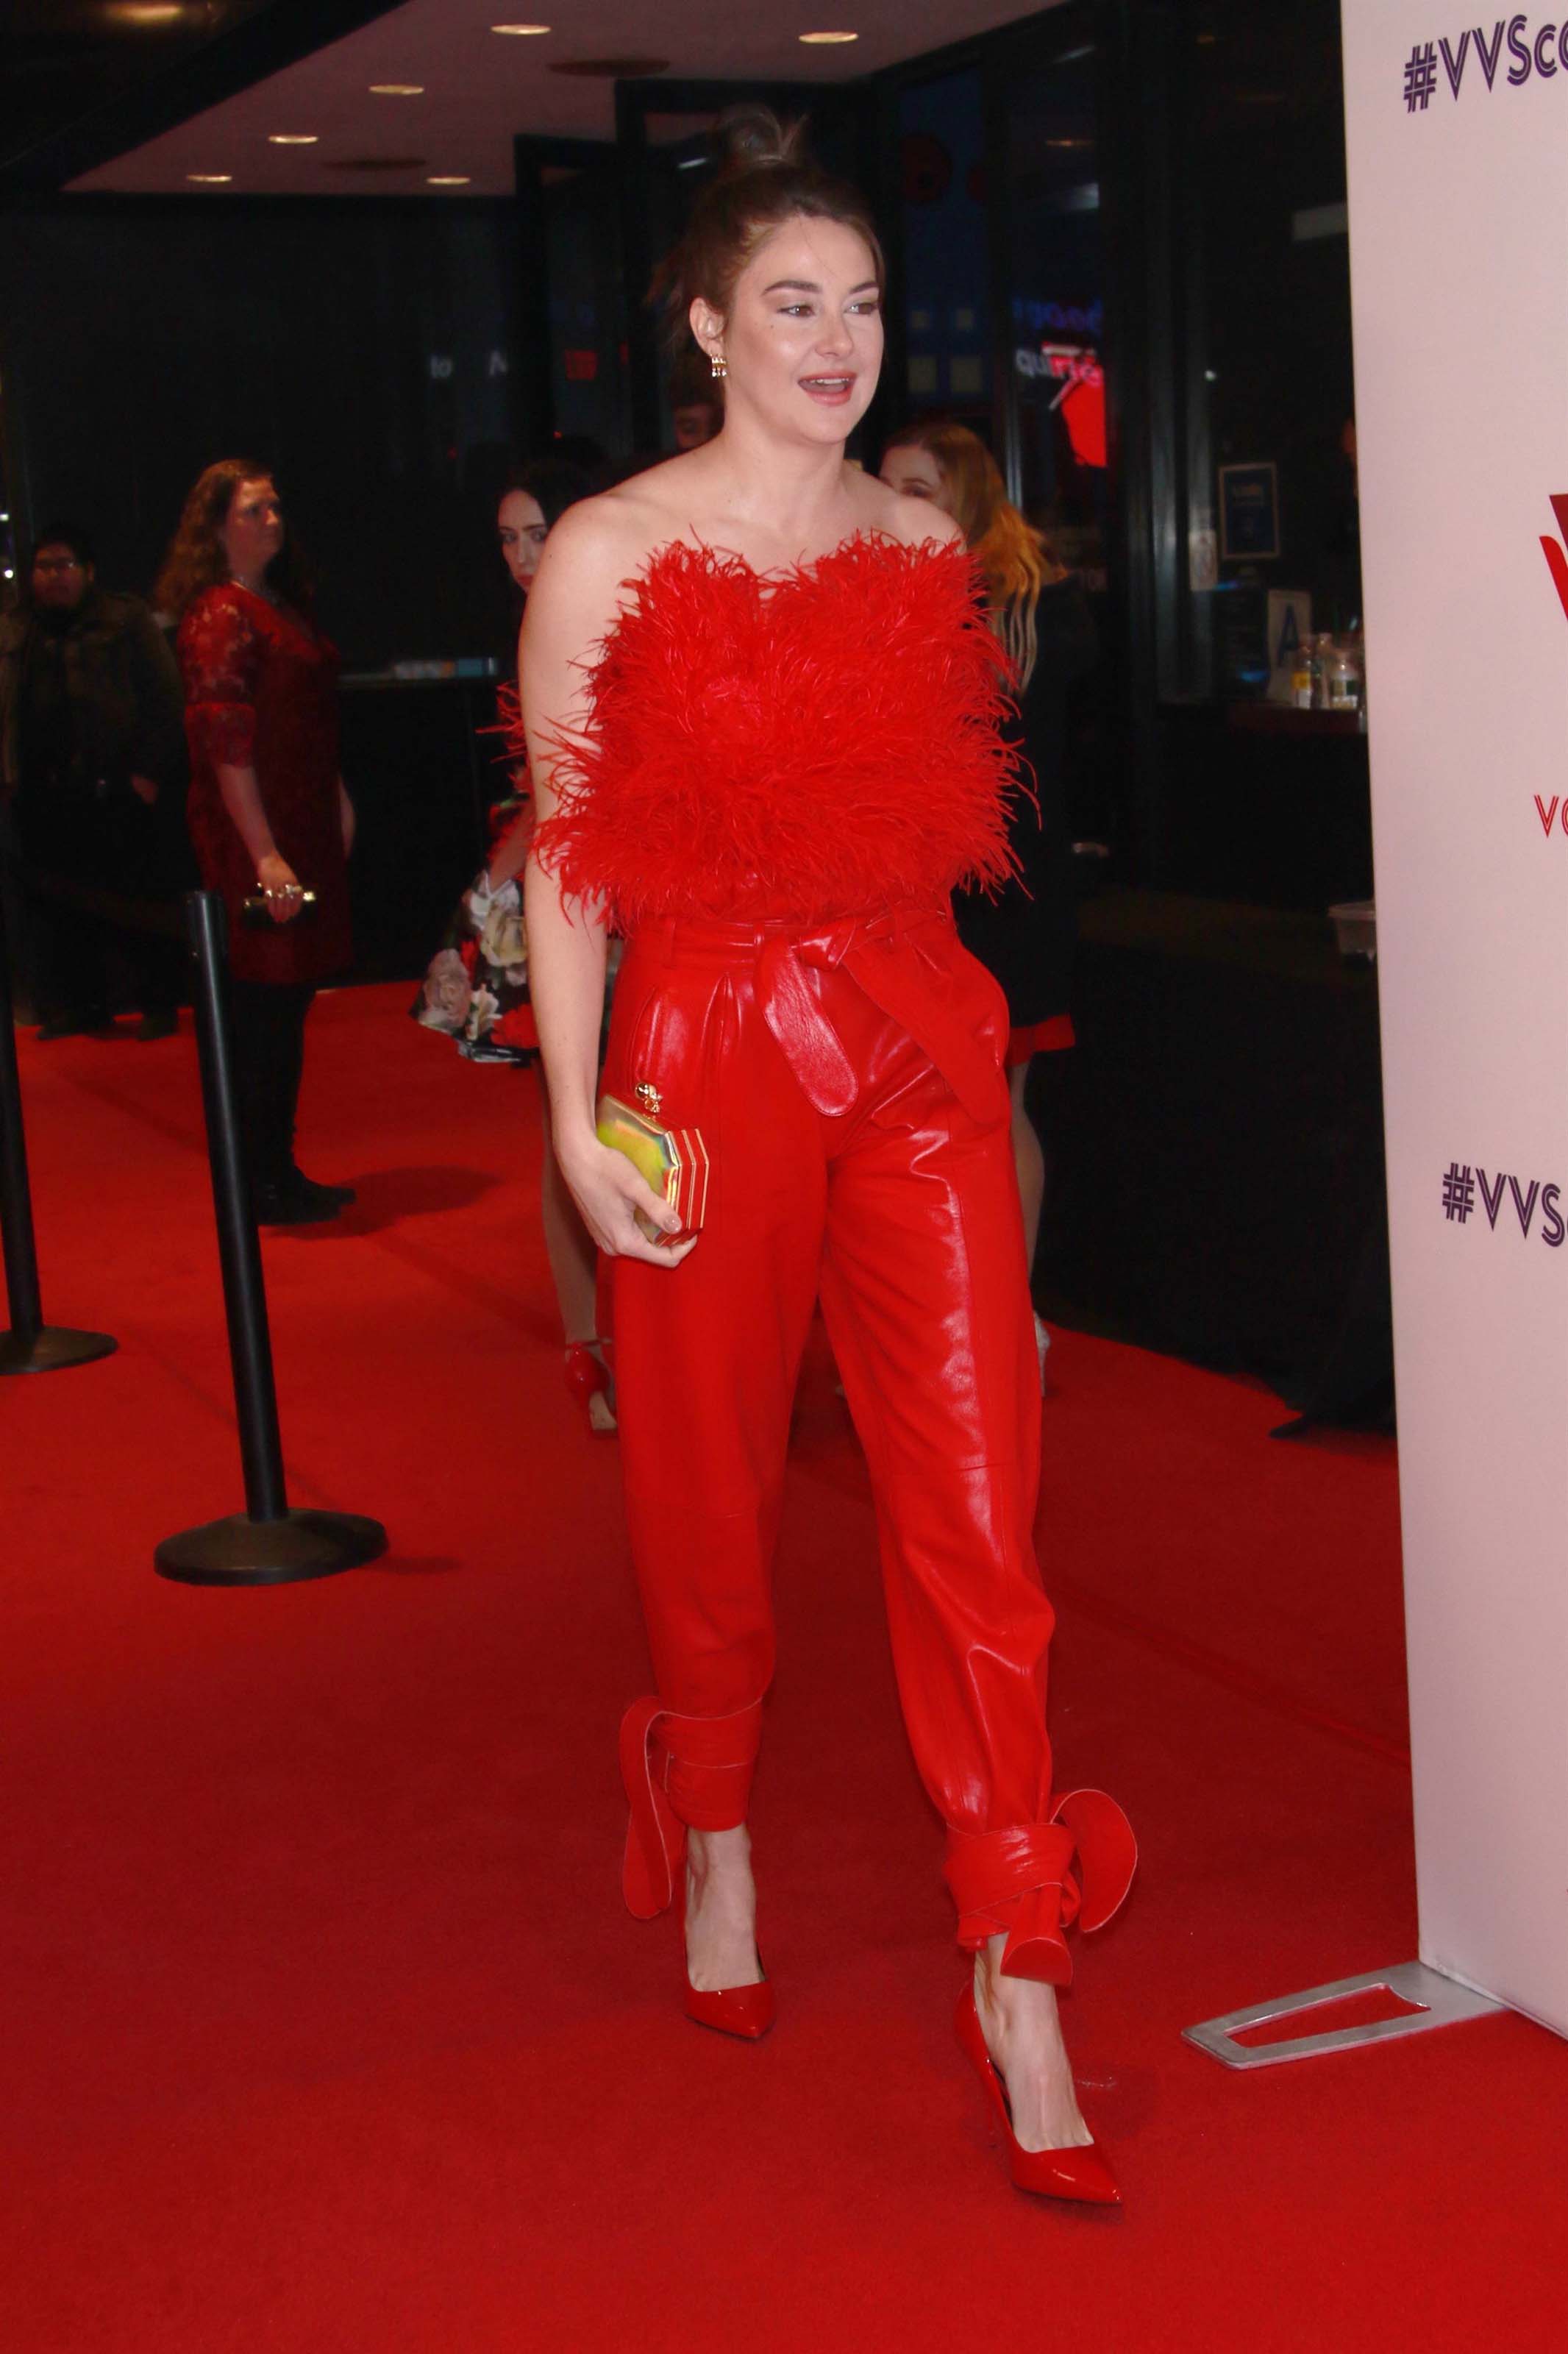 Shailene Woodley attends Virgin Voyages Scarlet Night Celebration